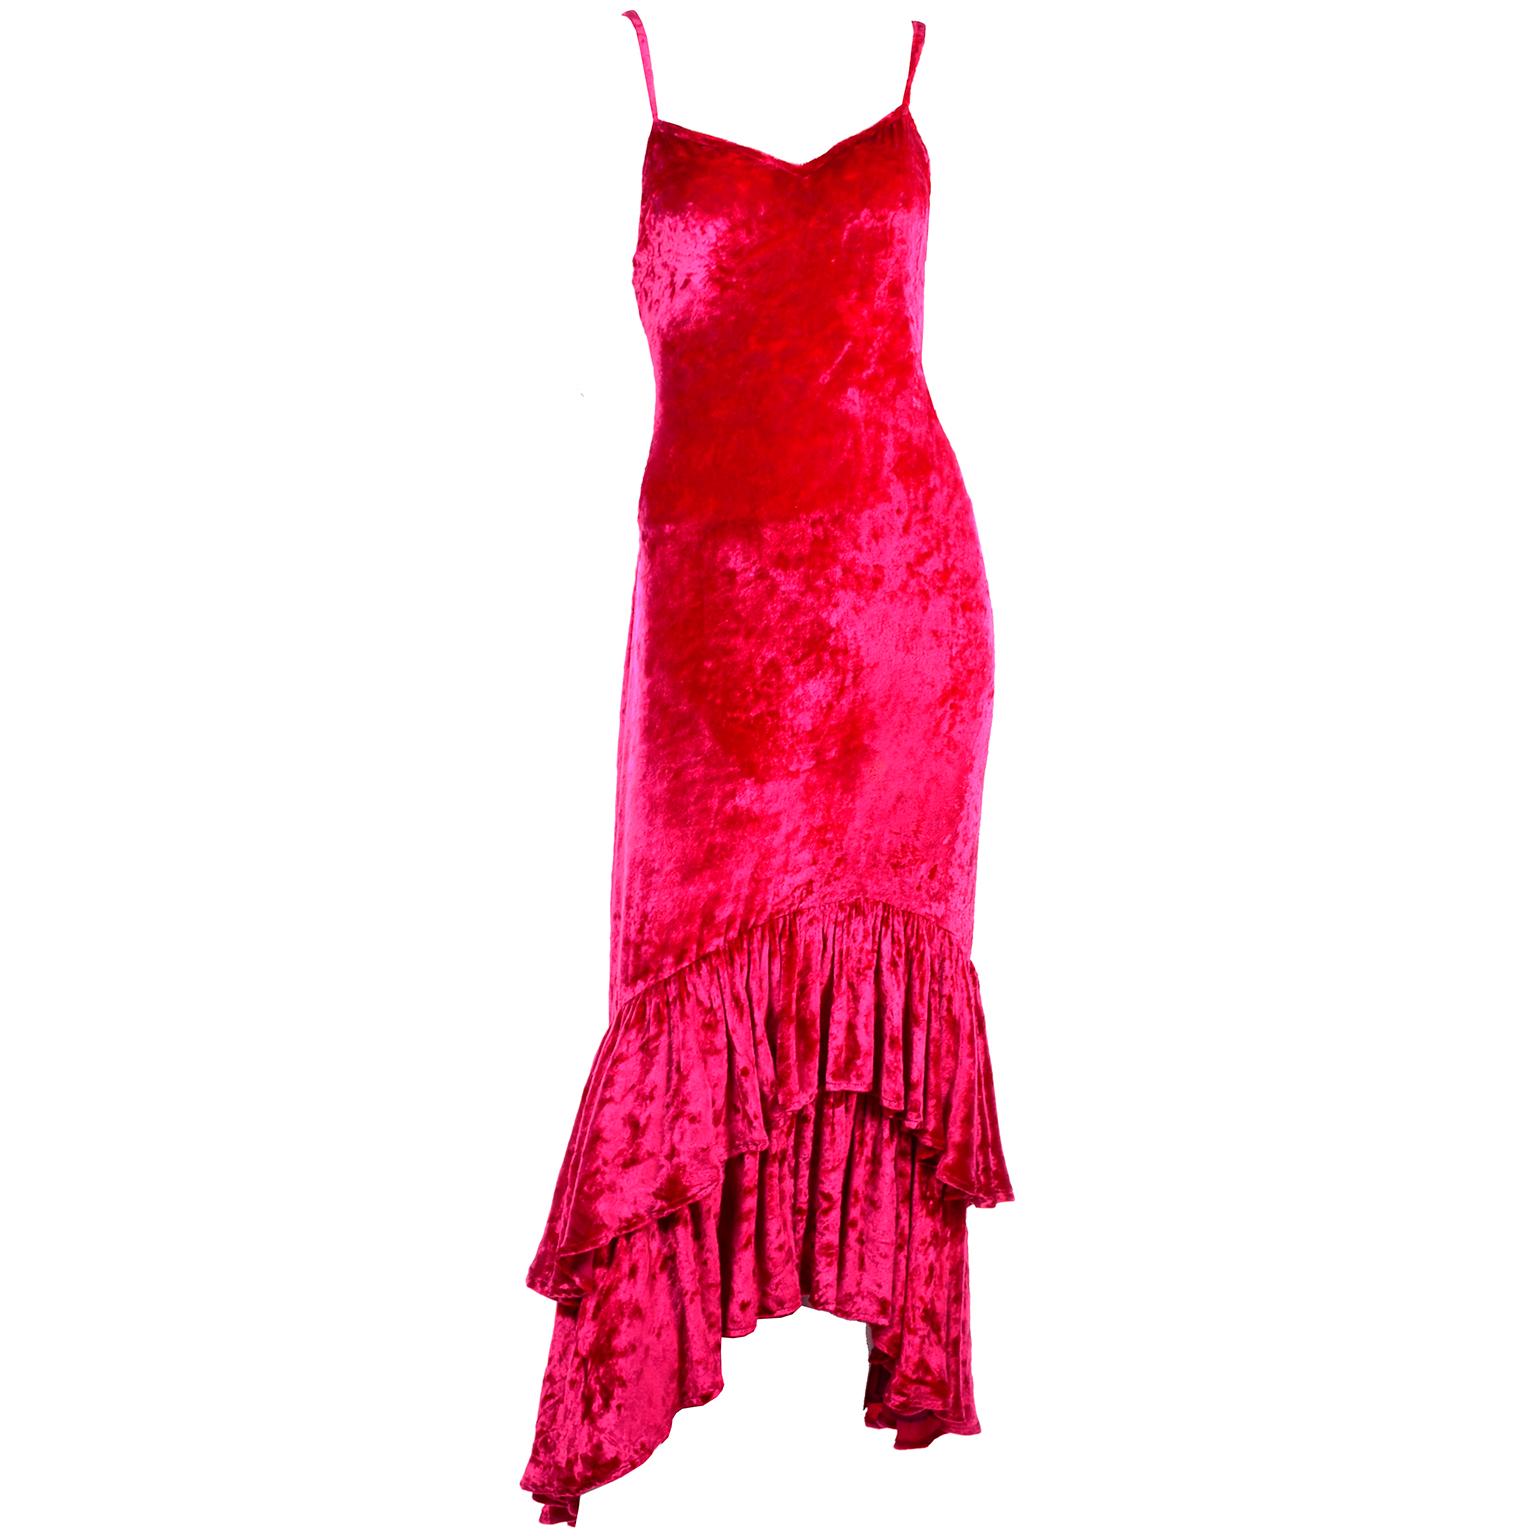 Sonia Rykiel Vintage Raspberry Red Crushed Velvet Dress W/ Ruffled High Low Hem For Sale